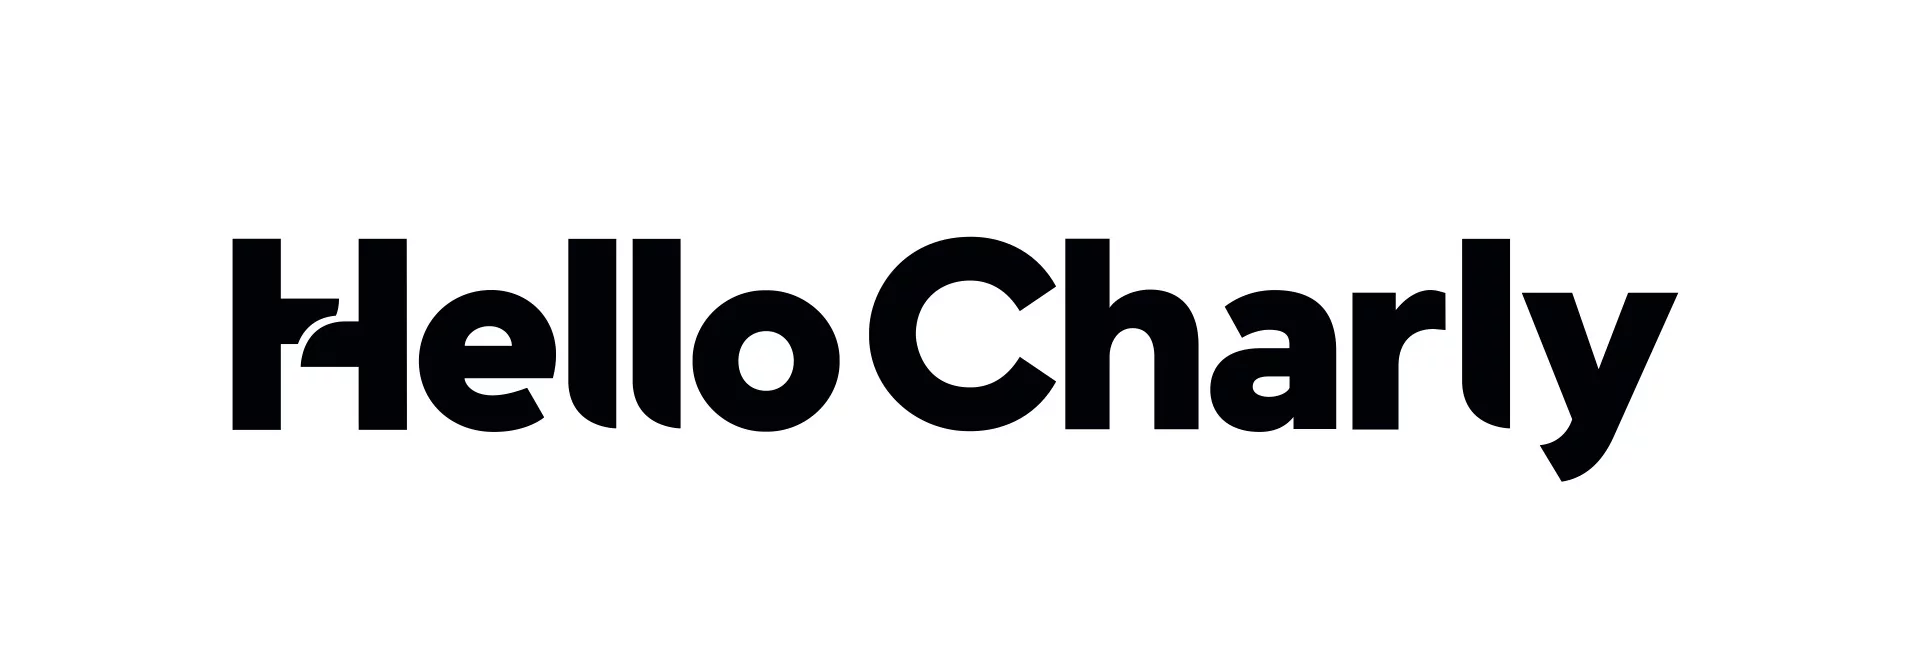 Logo Hello Charly noir sur fond blanc